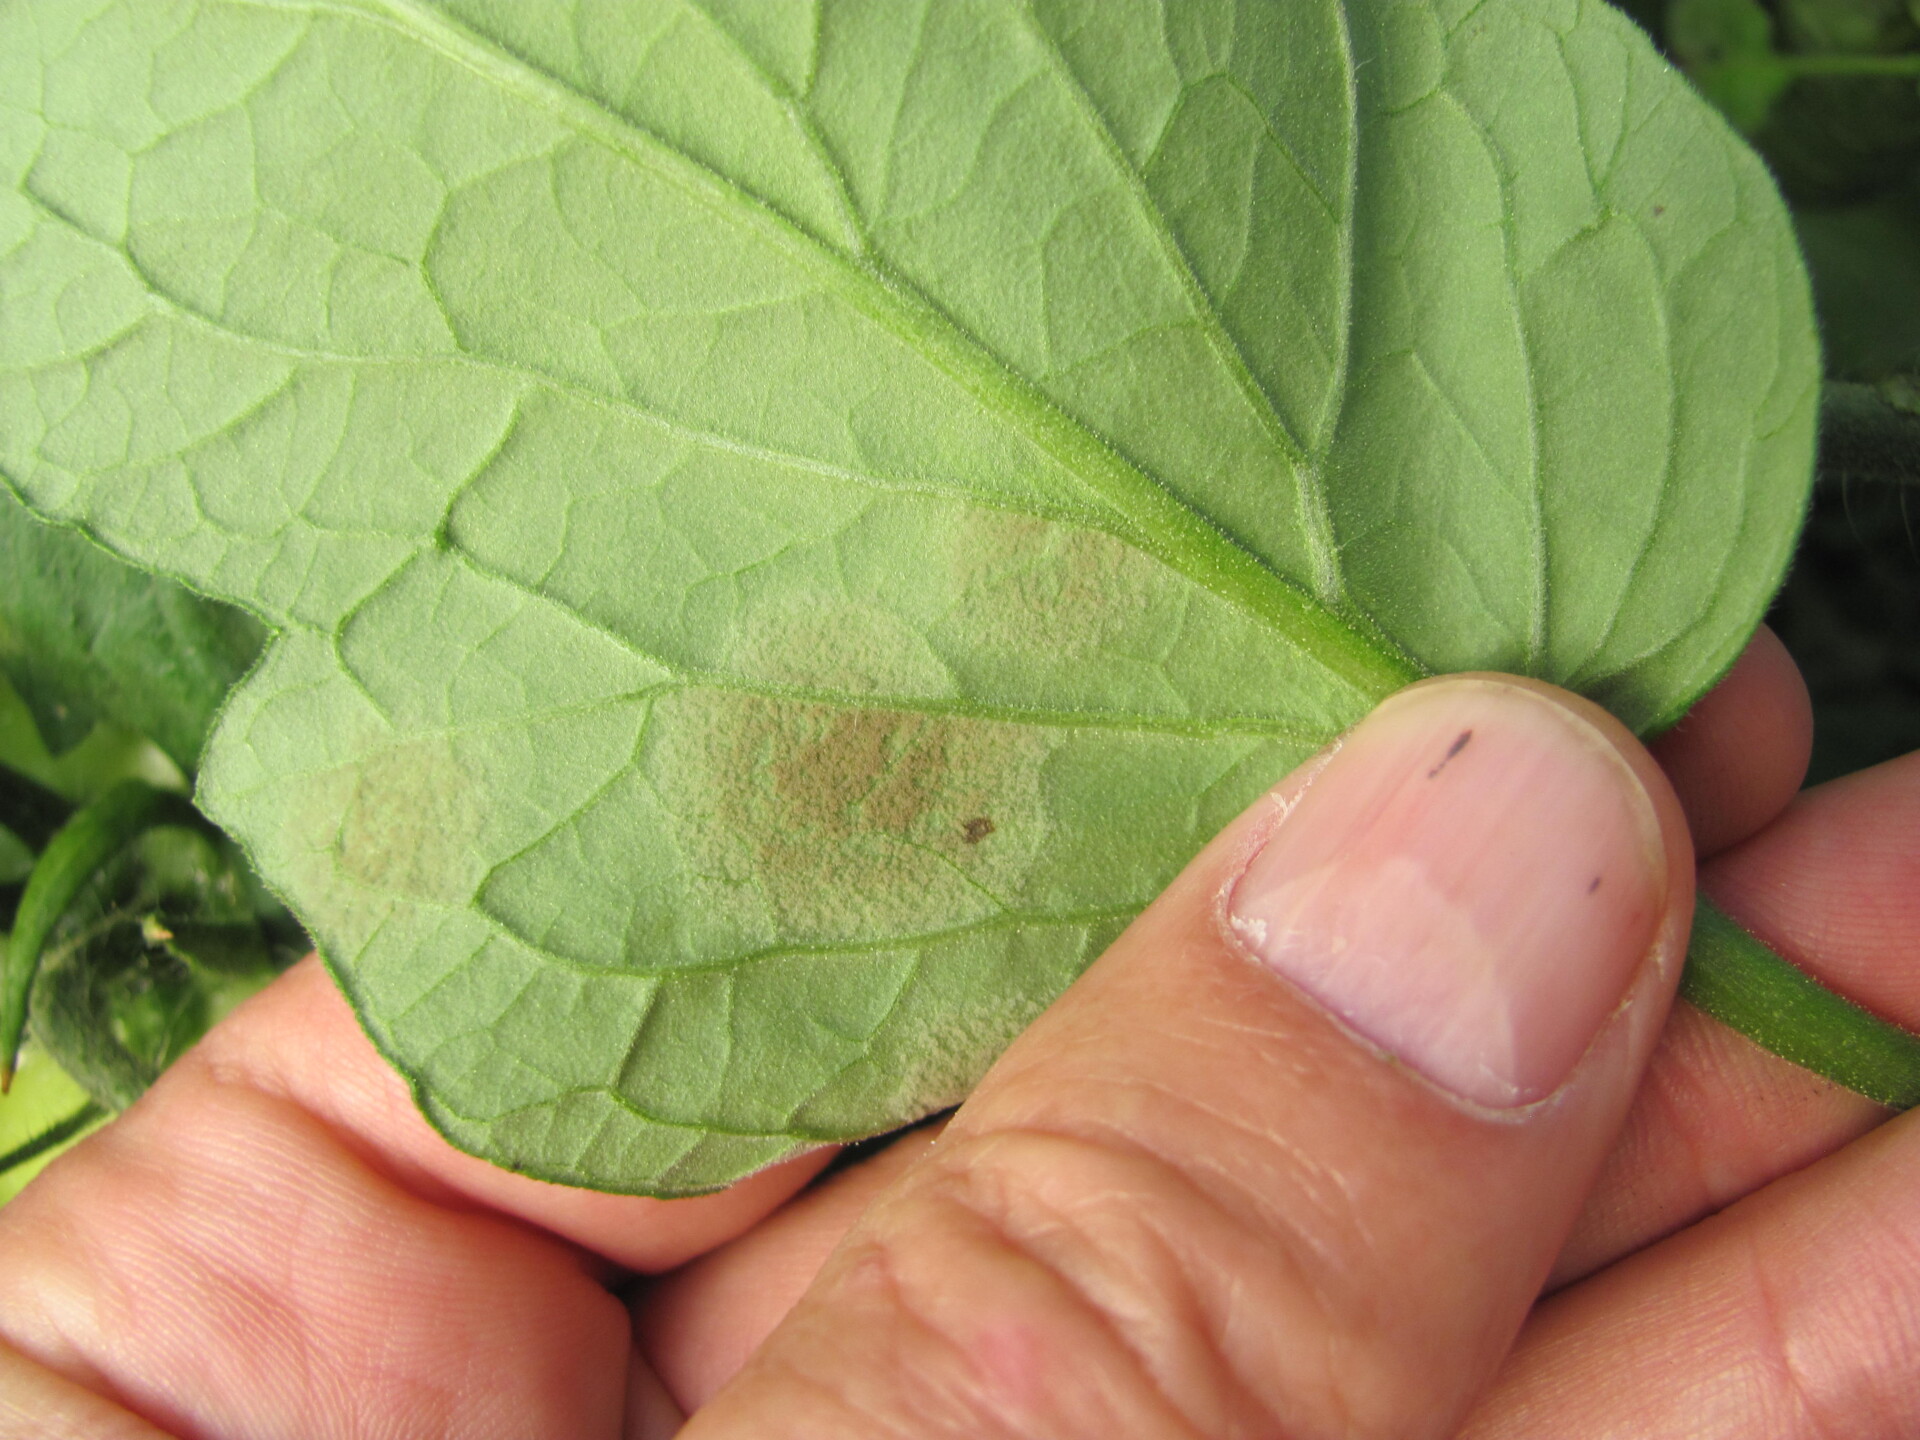 Figure 12. Close up of sporulation on underside of tomato leaf with leaf mold.